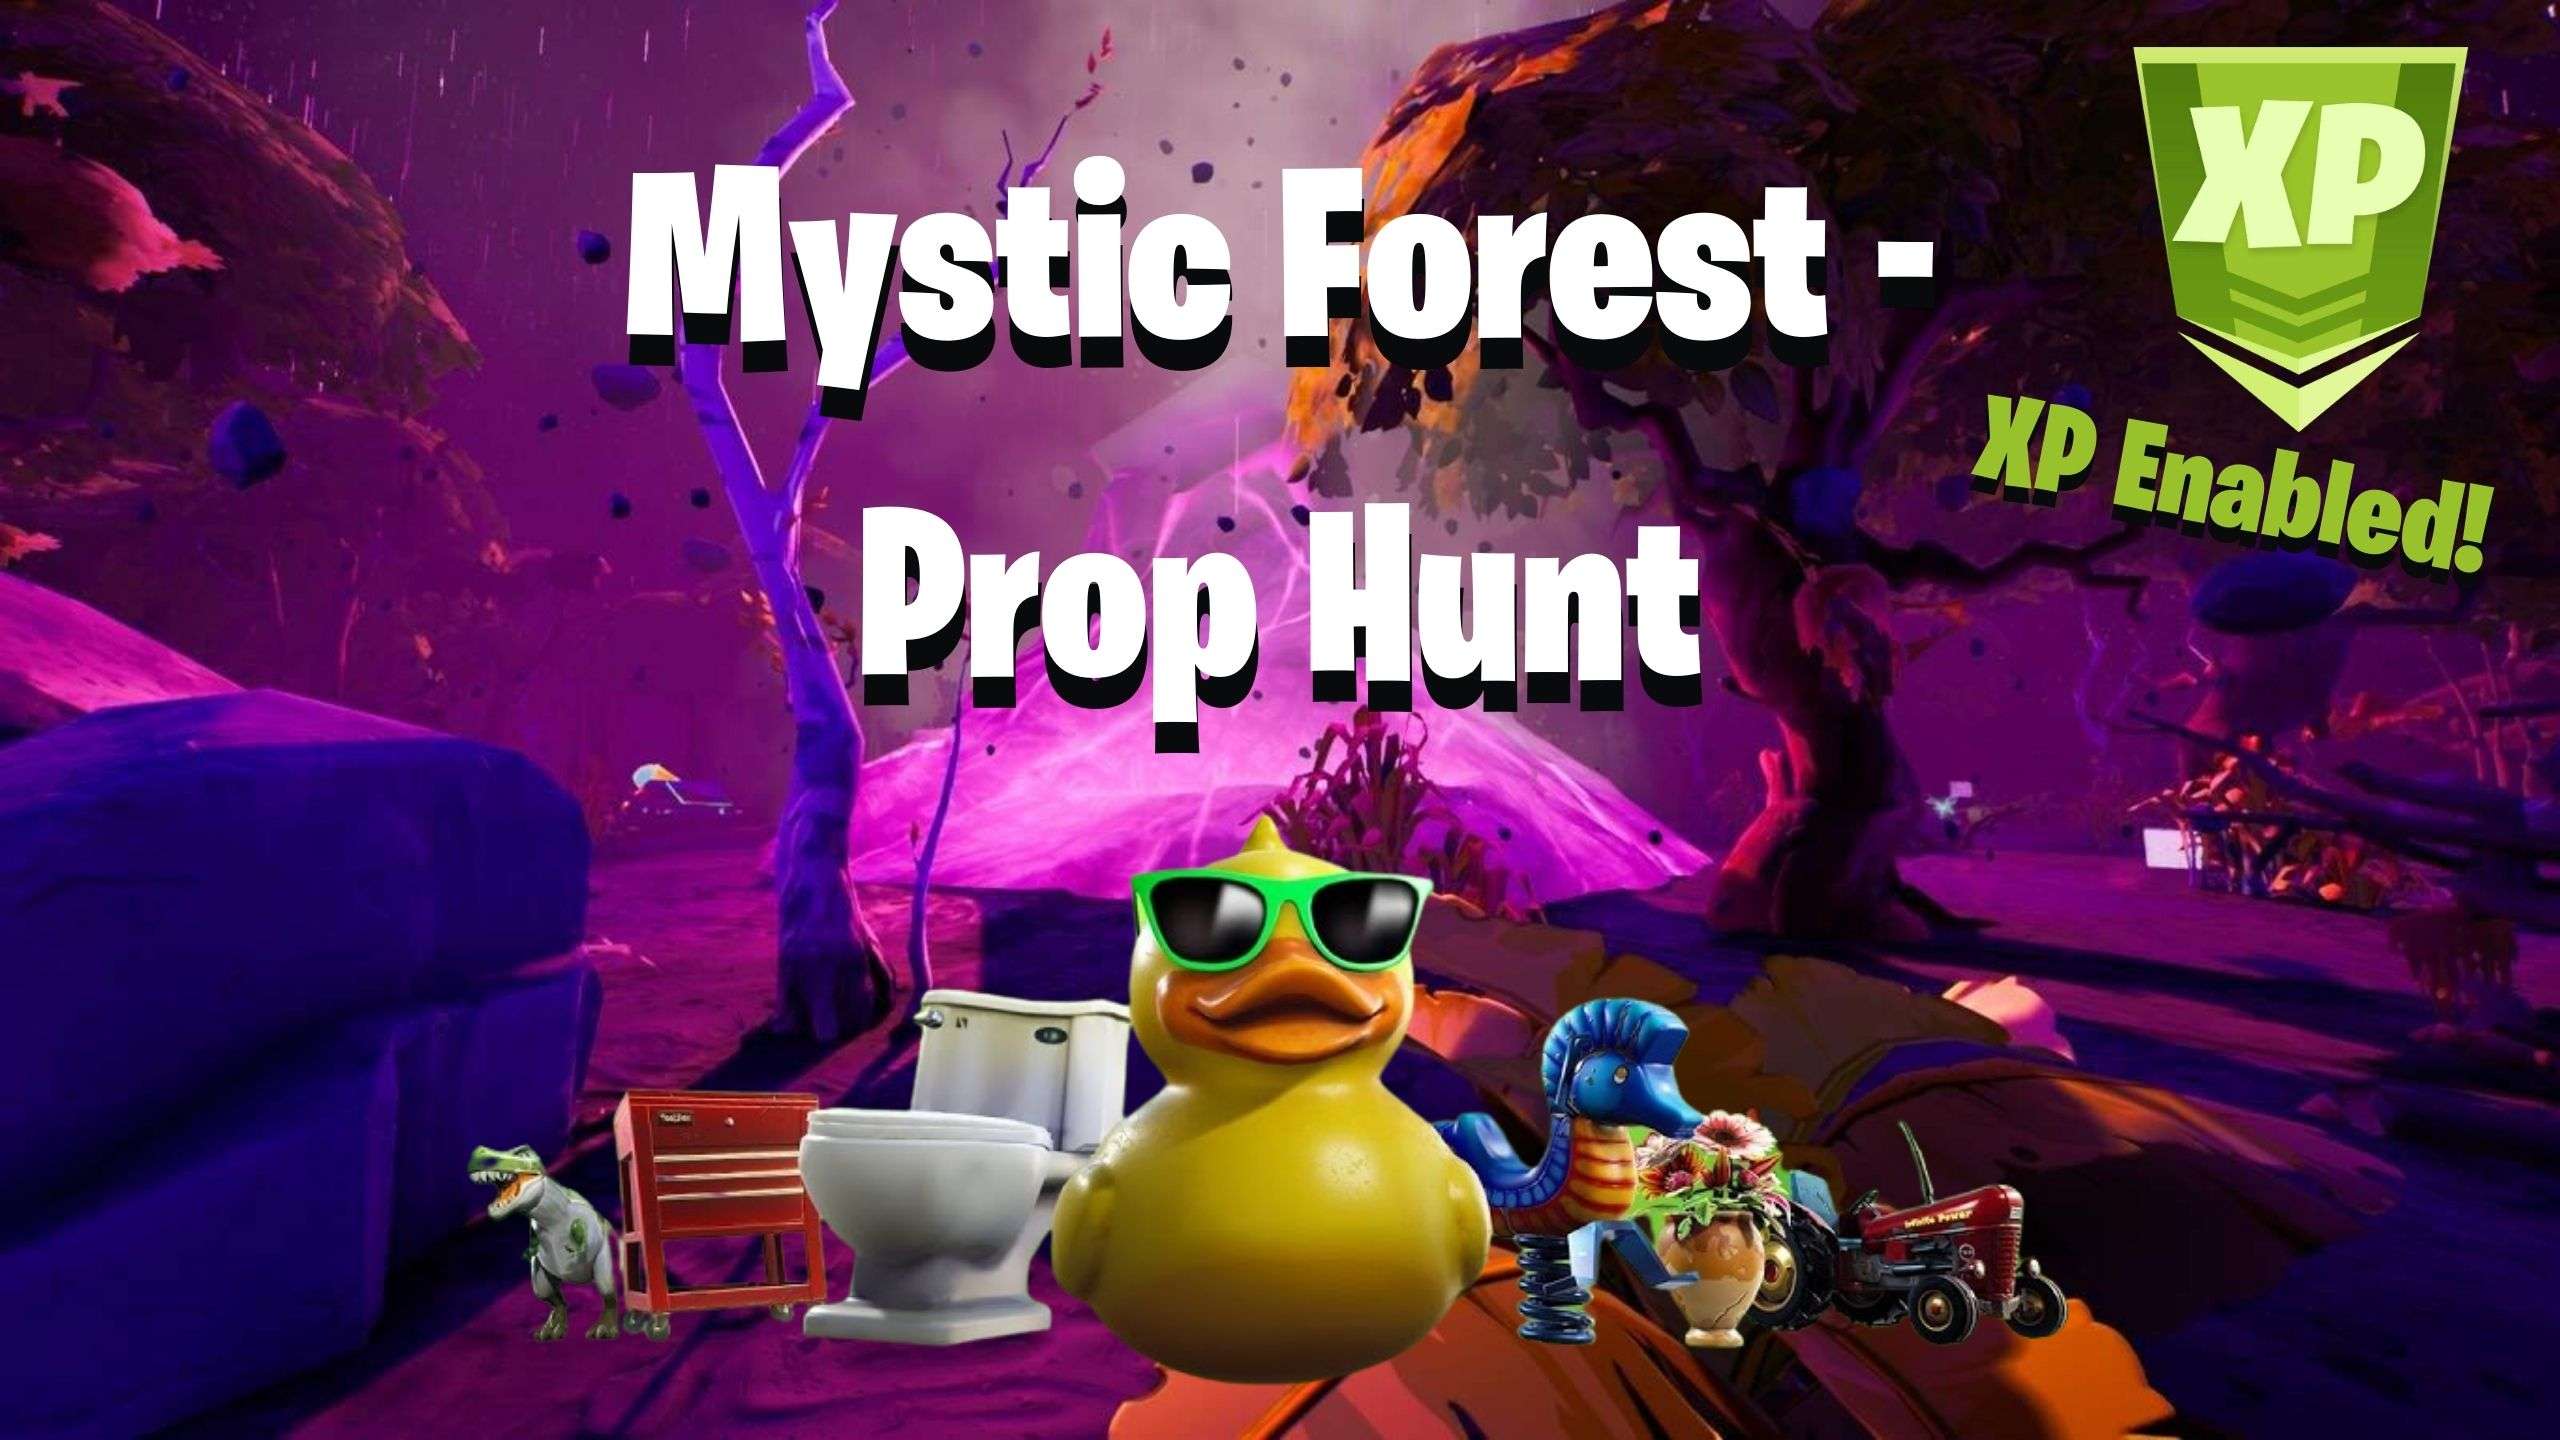 MYSTIC FOREST - PROP HUNT